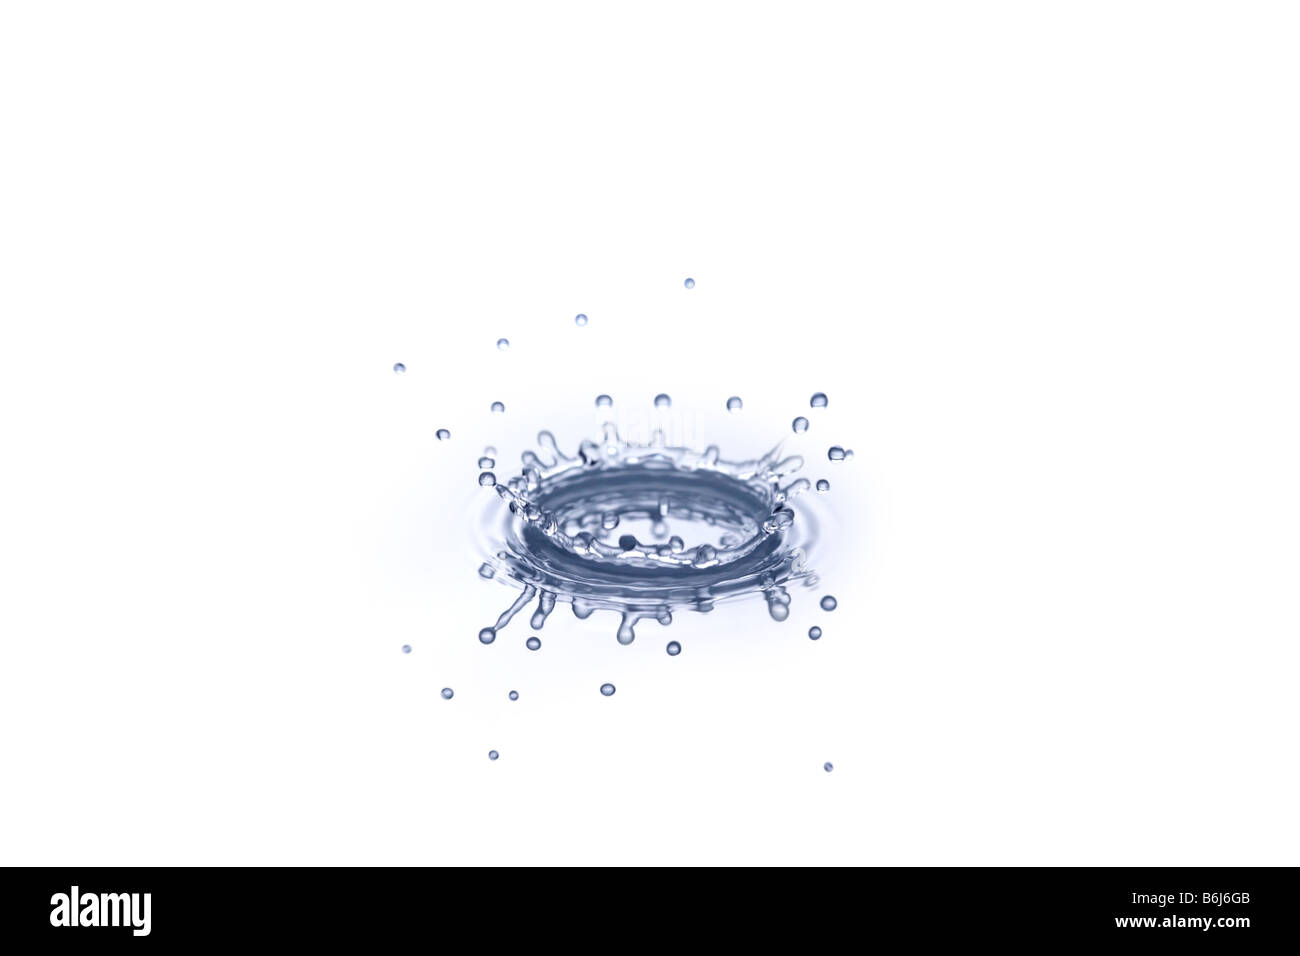 Single drip of water splashing onto surface cutout on white background Stock Photo